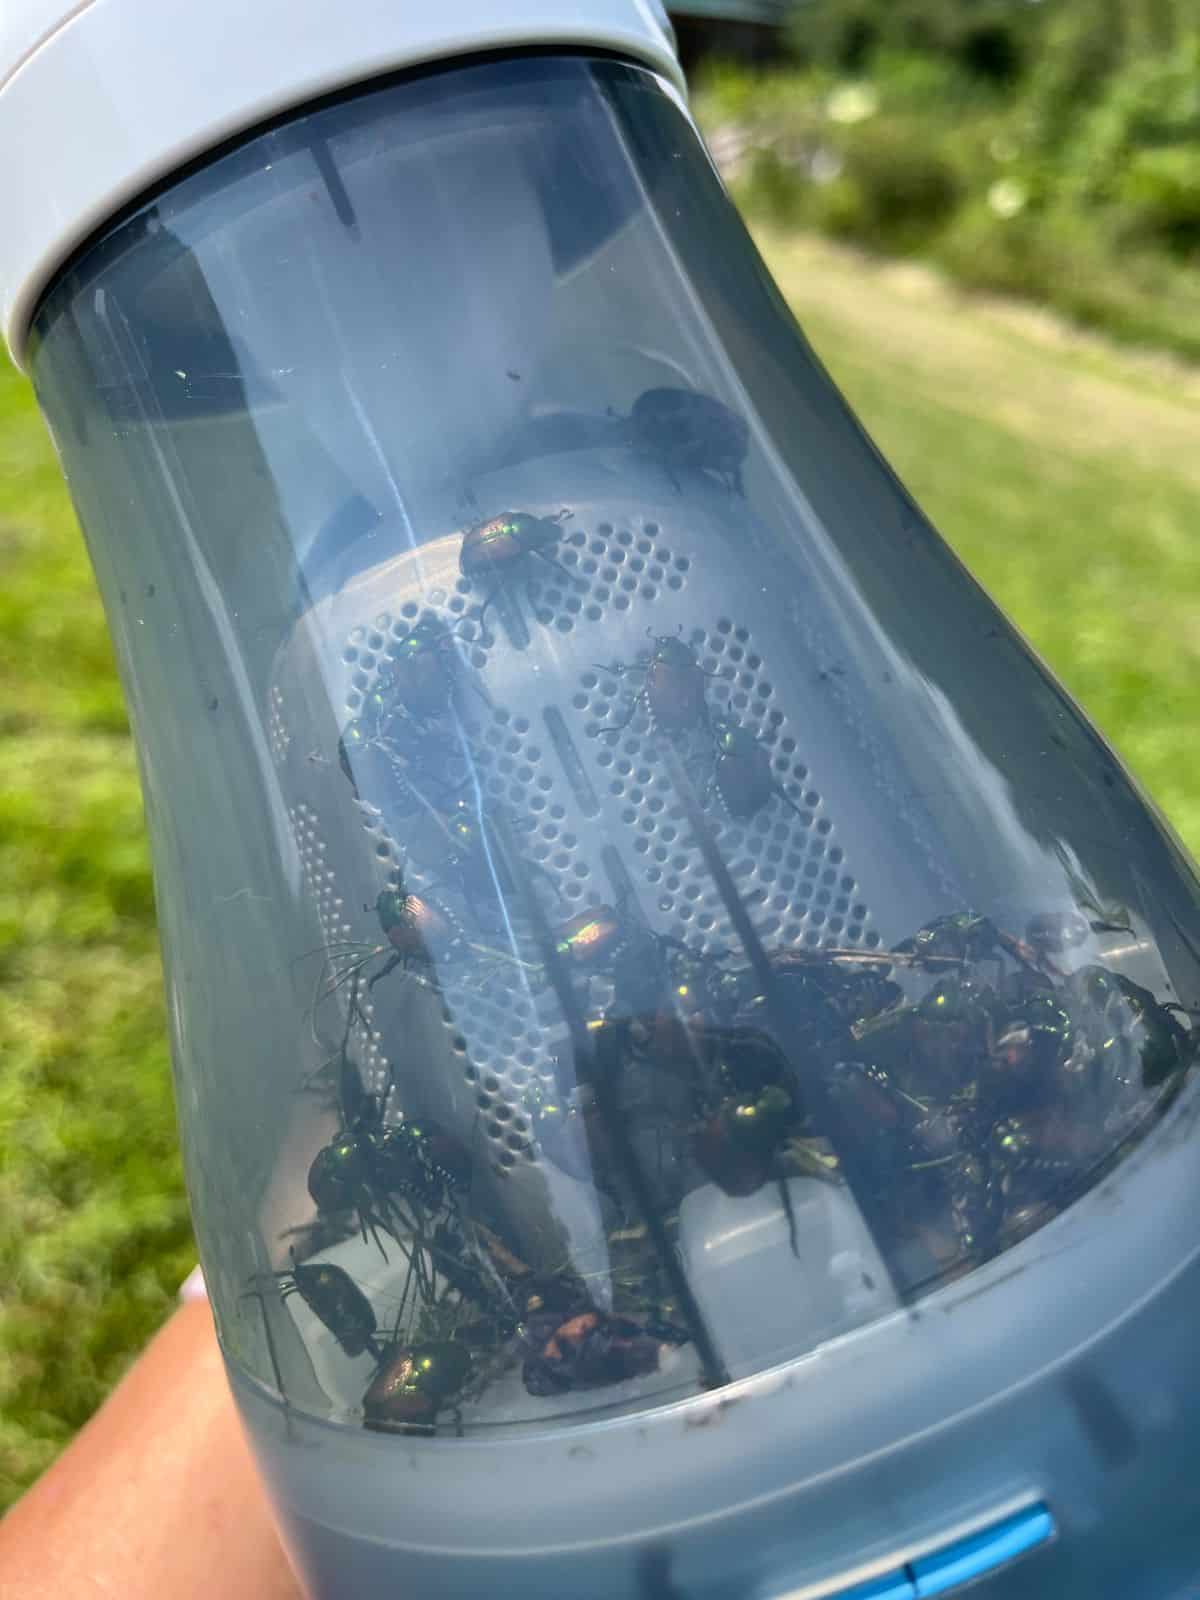 Japanese beetles collected in a handheld vacuum